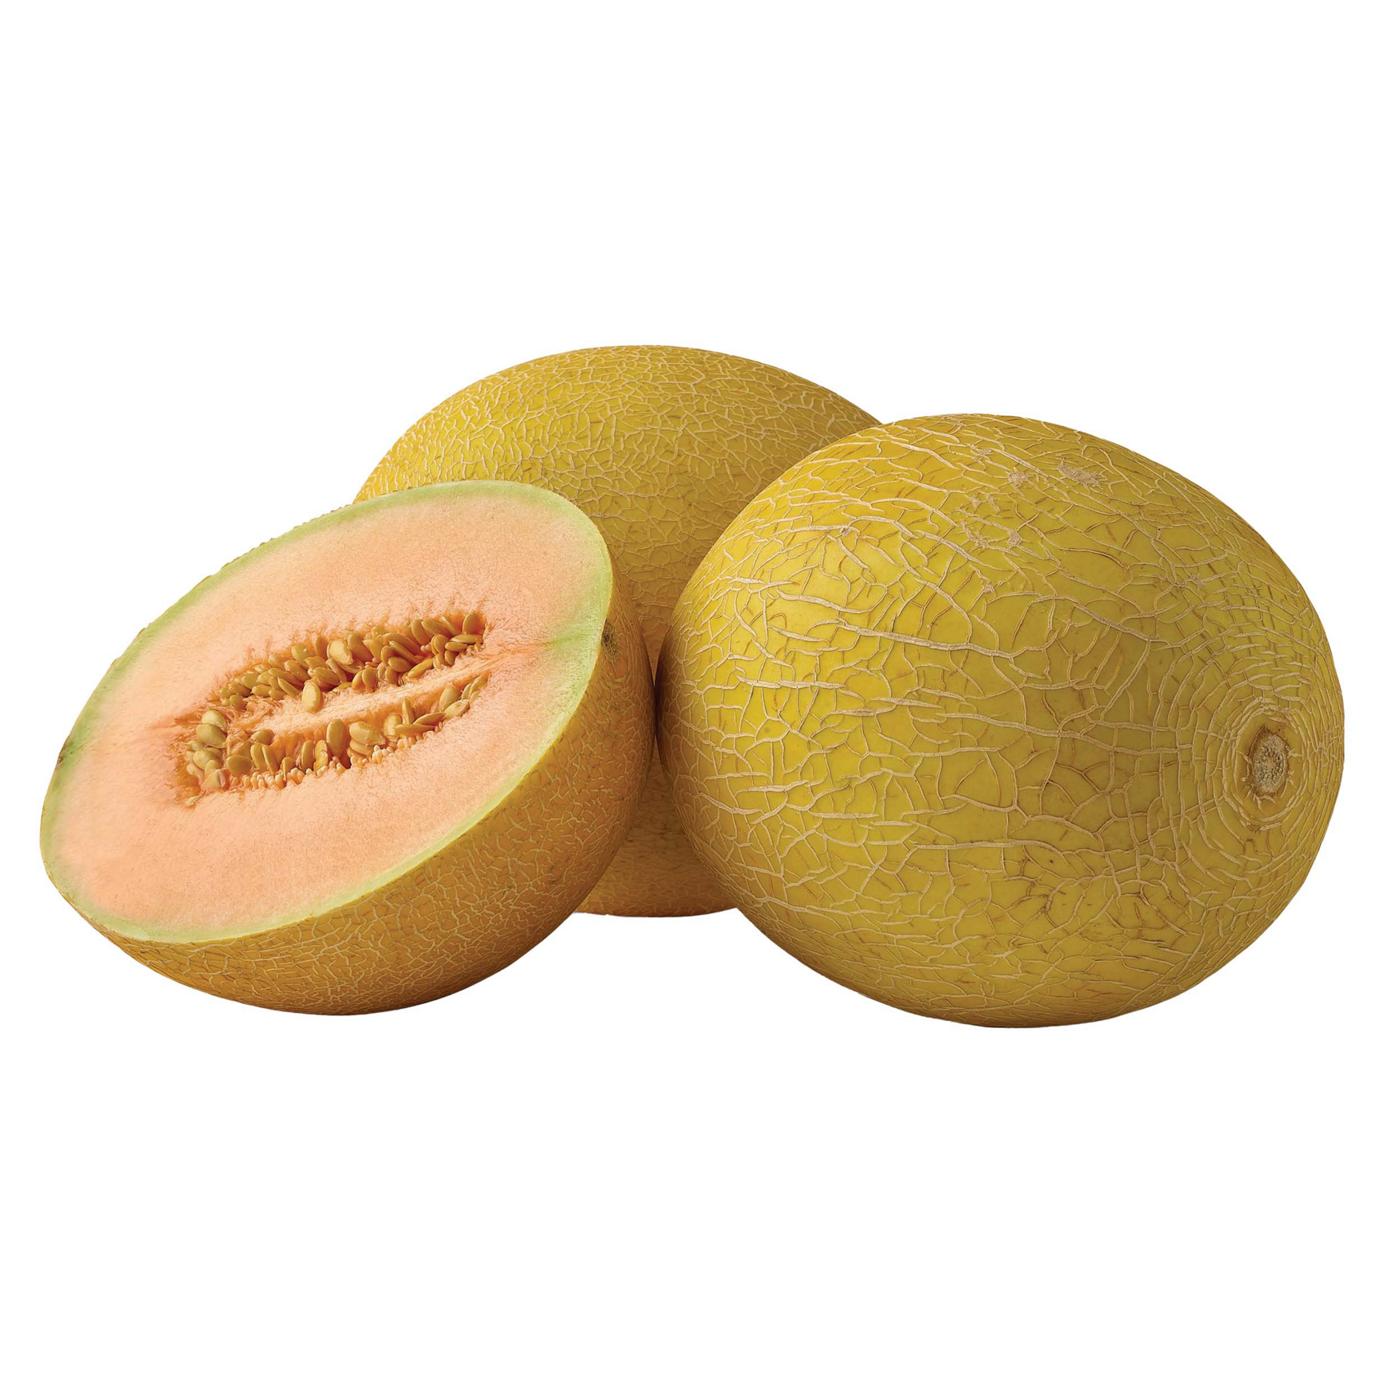 H-E-B Texas Roots Fresh Golden Cantaloupe; image 2 of 2